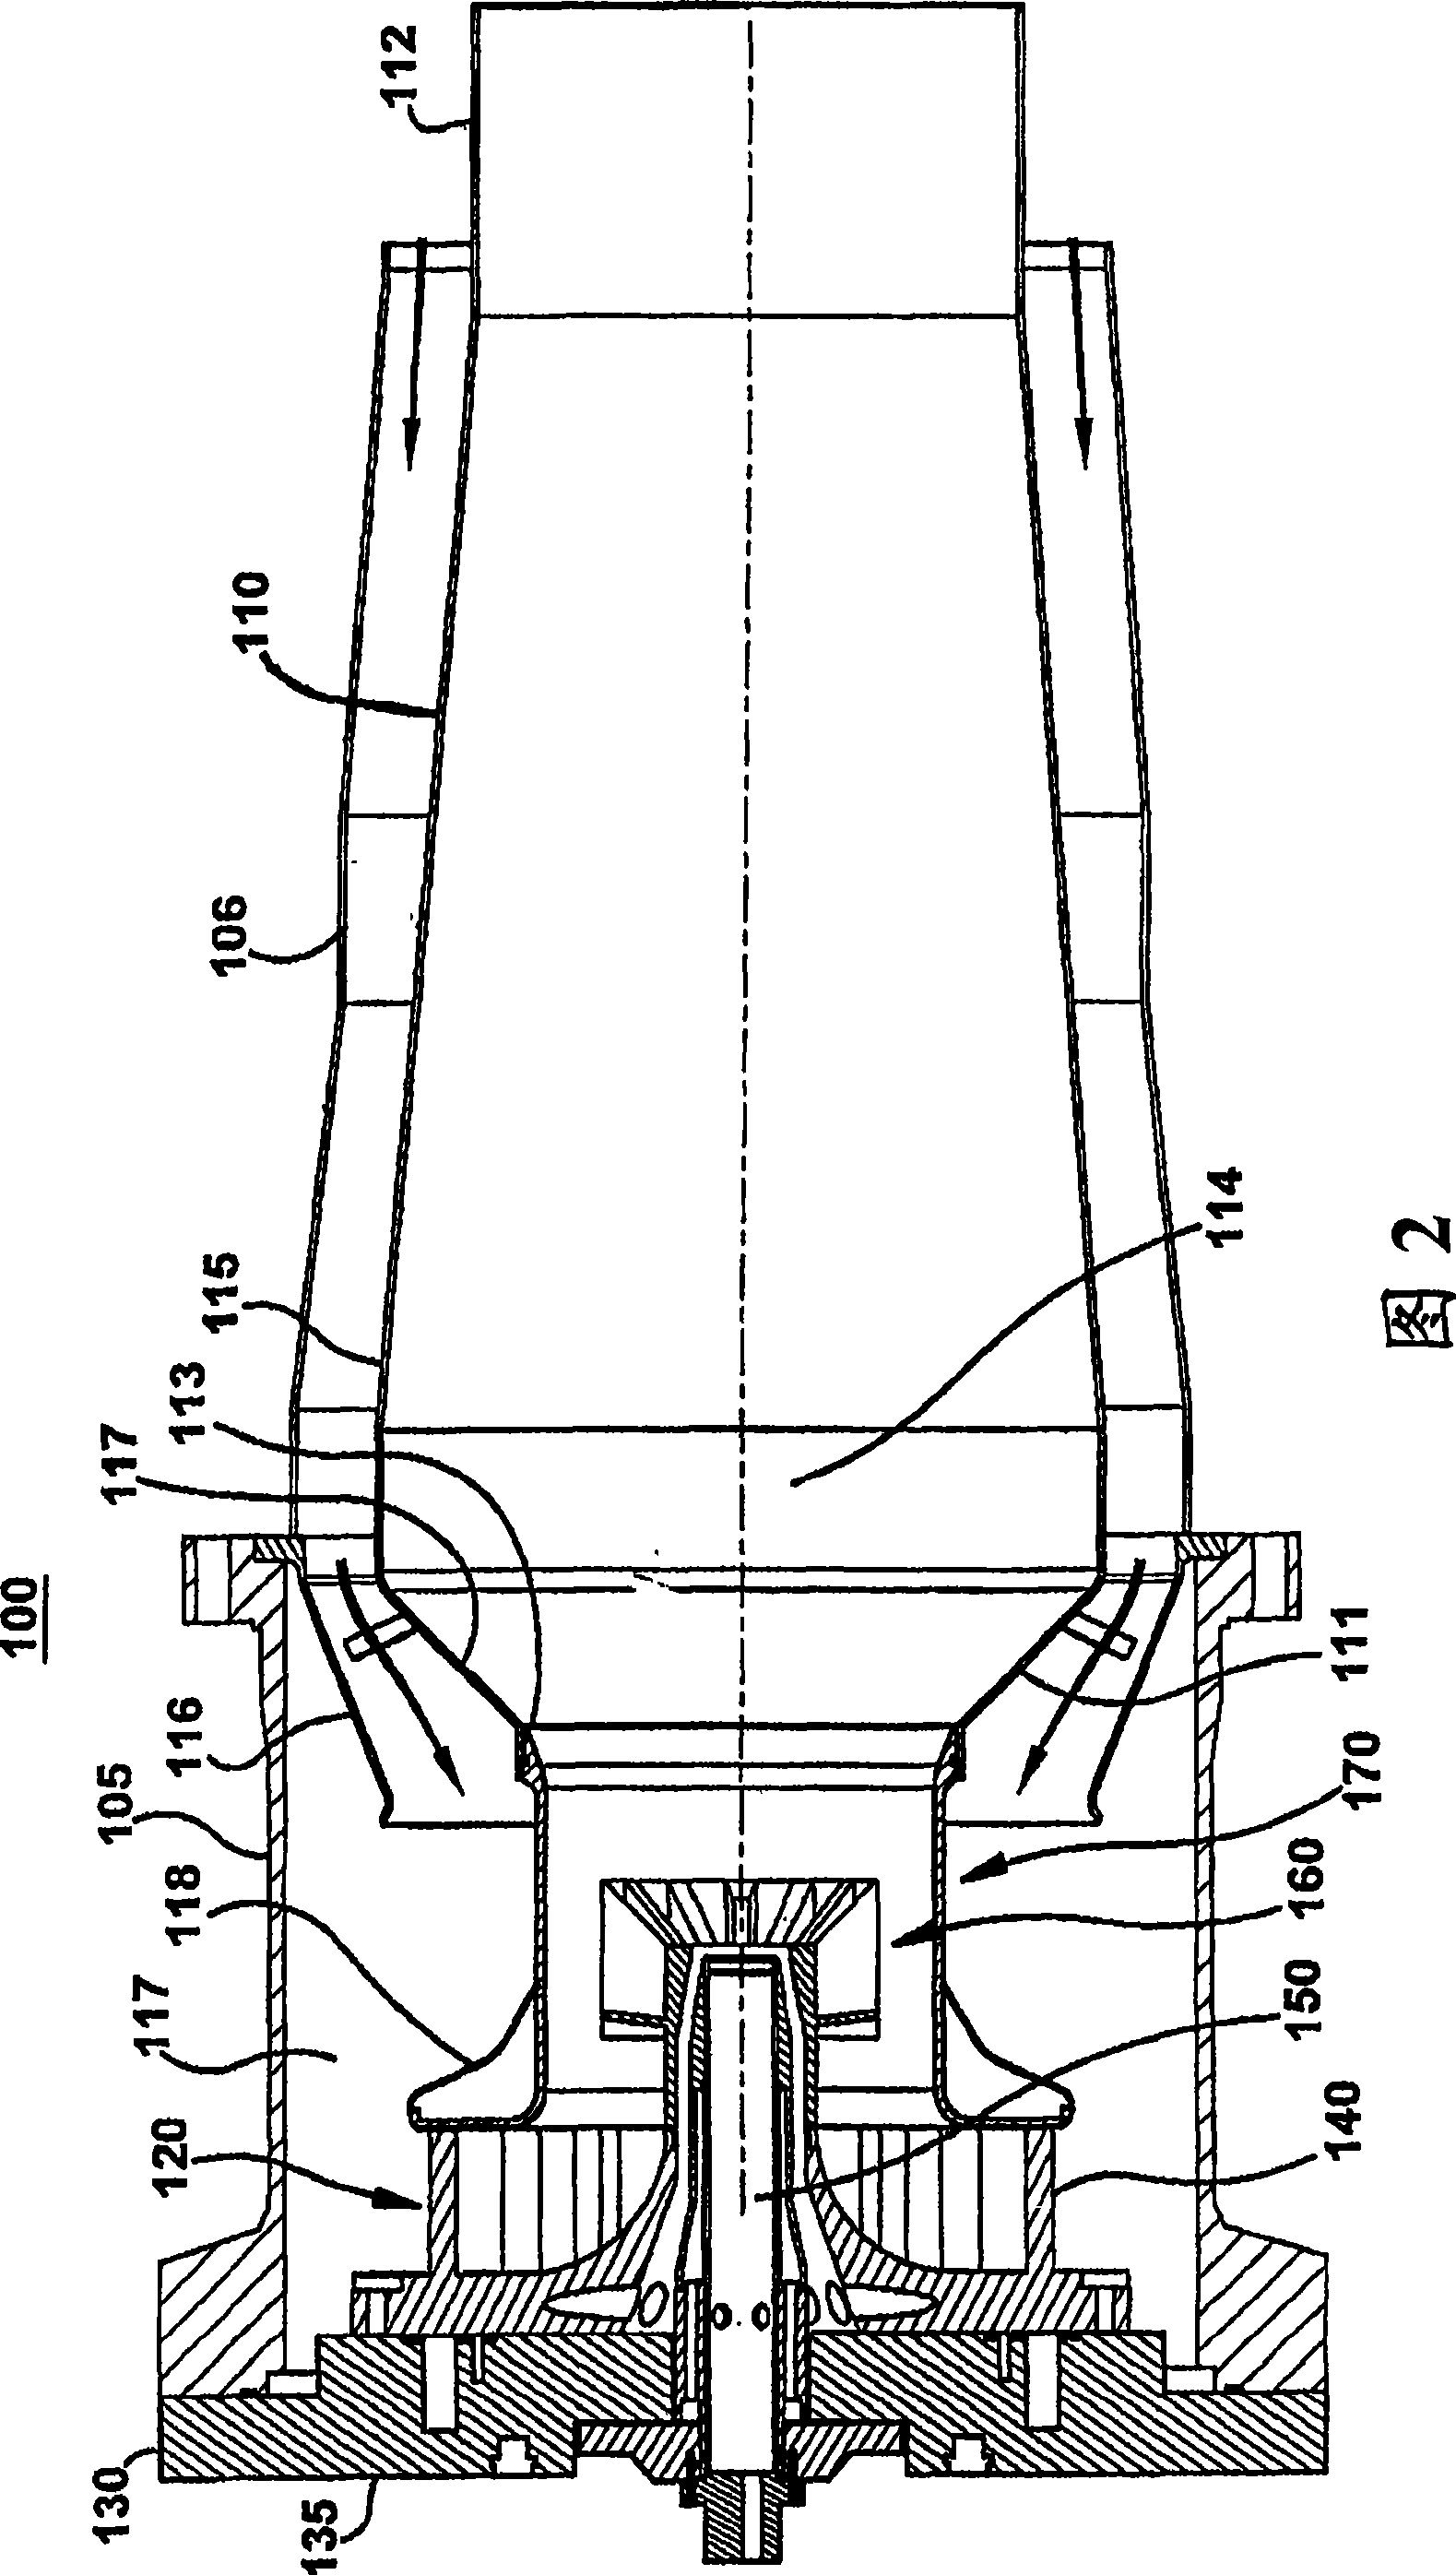 Mager vorgemischte dual-fuel-ringrohrbrennkammer mit radial-mehrring-stufenduse